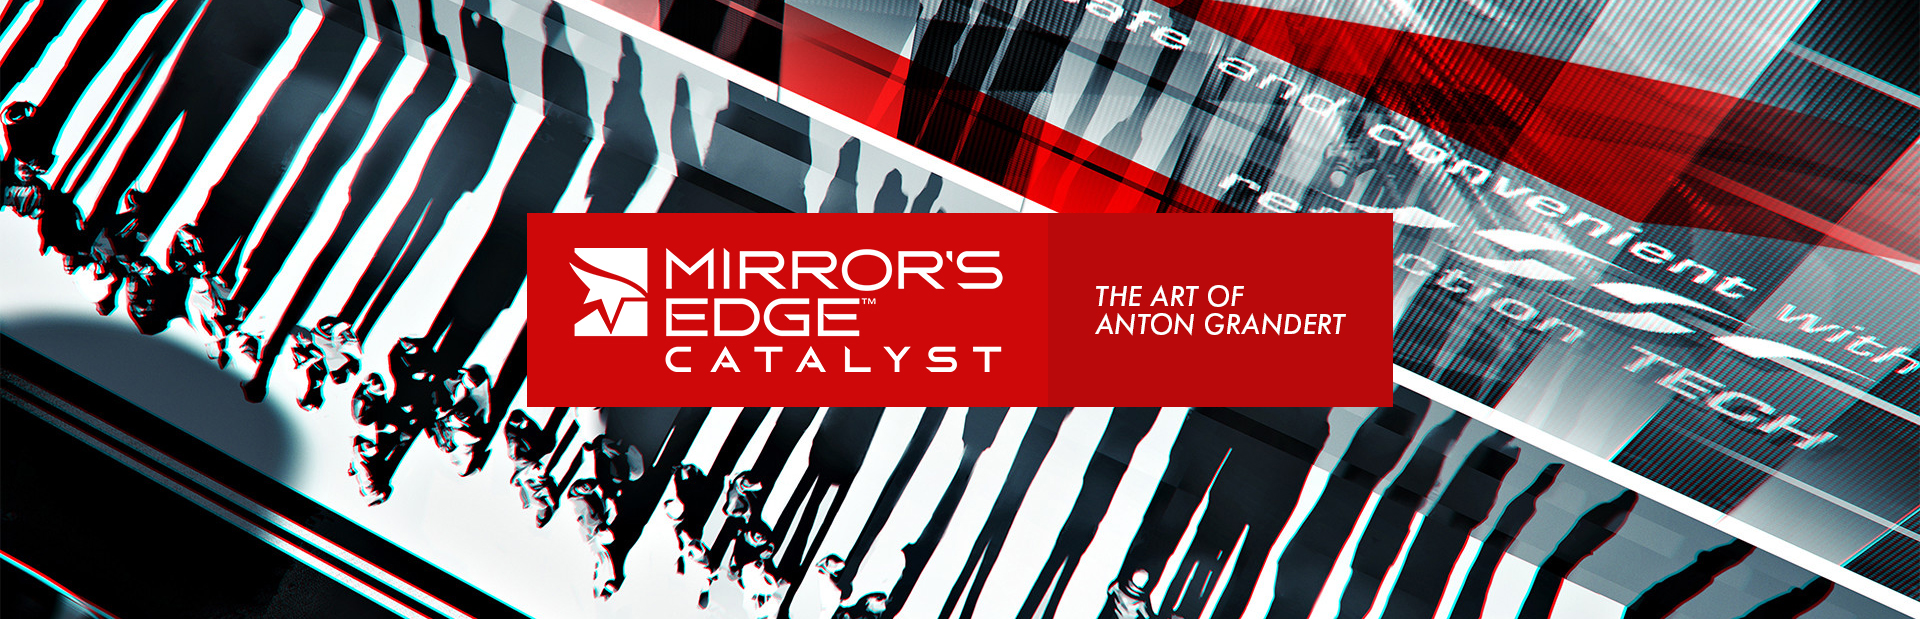 The Art of Mirror's Edge Catalyst by Anton Grandert